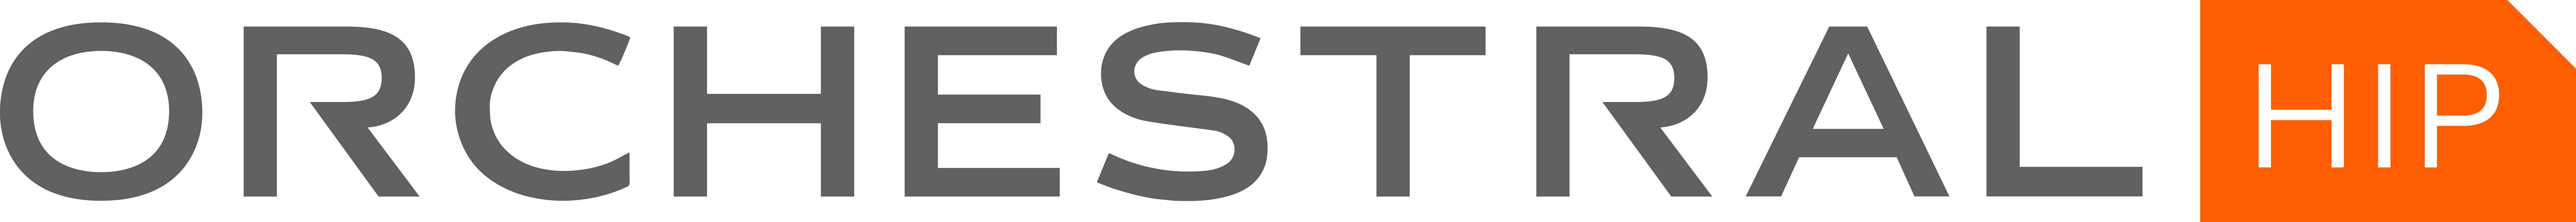 Orchestral HIP Logo